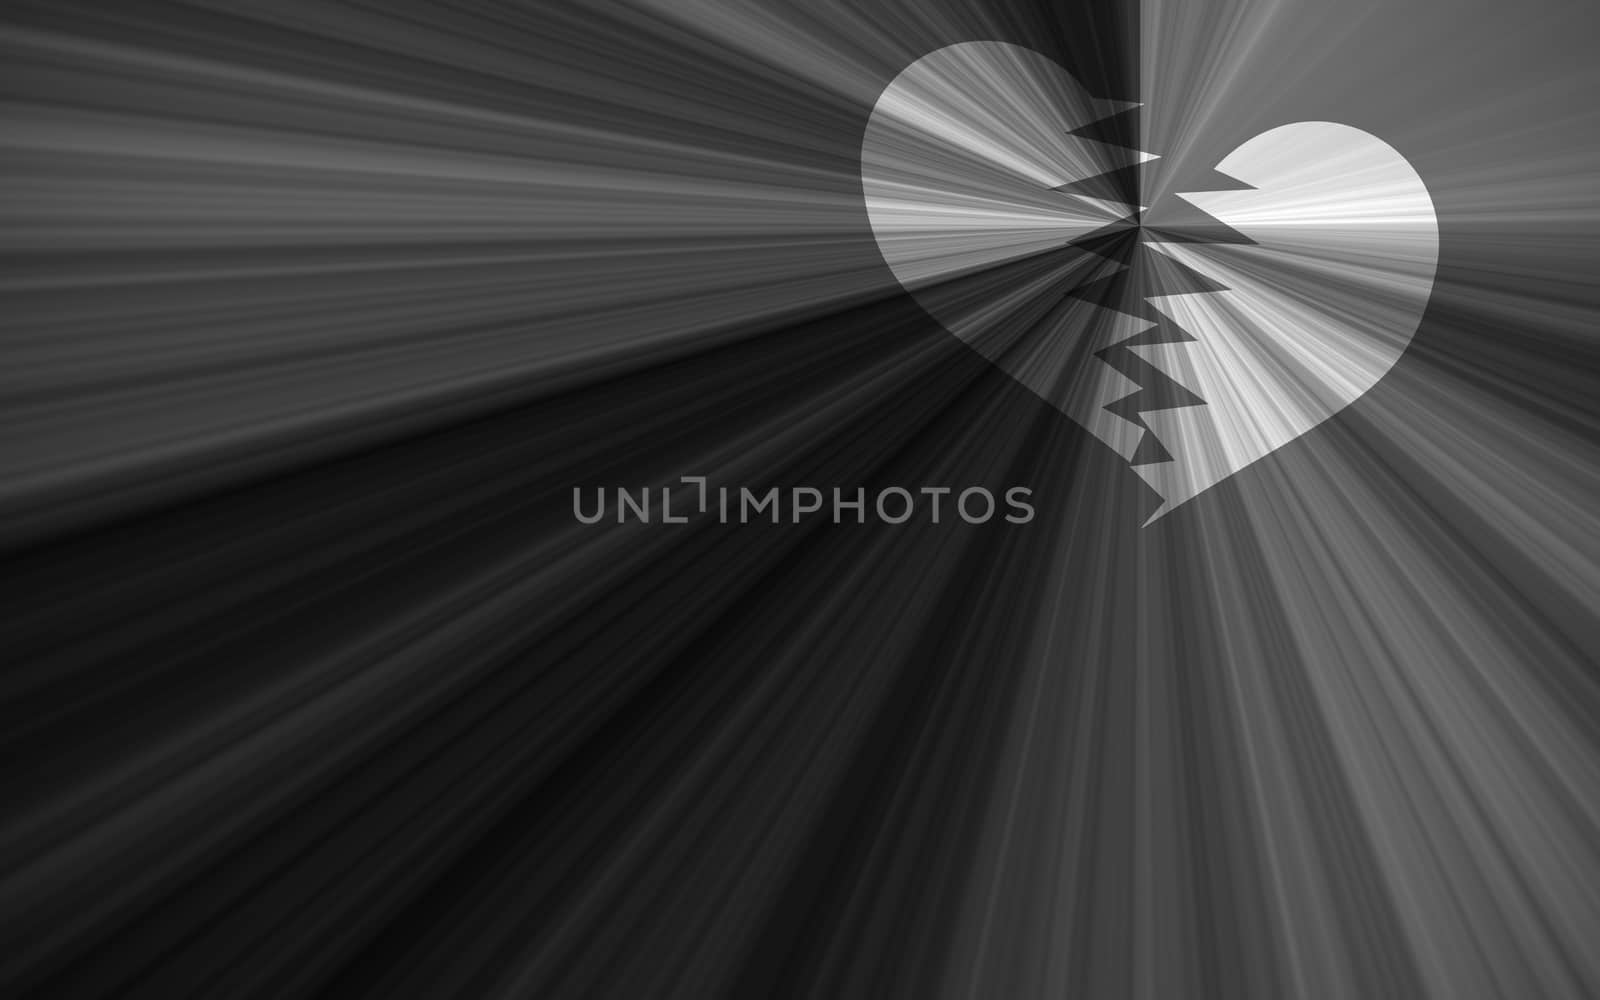 black valentine background, black and white starburst with heart breaking